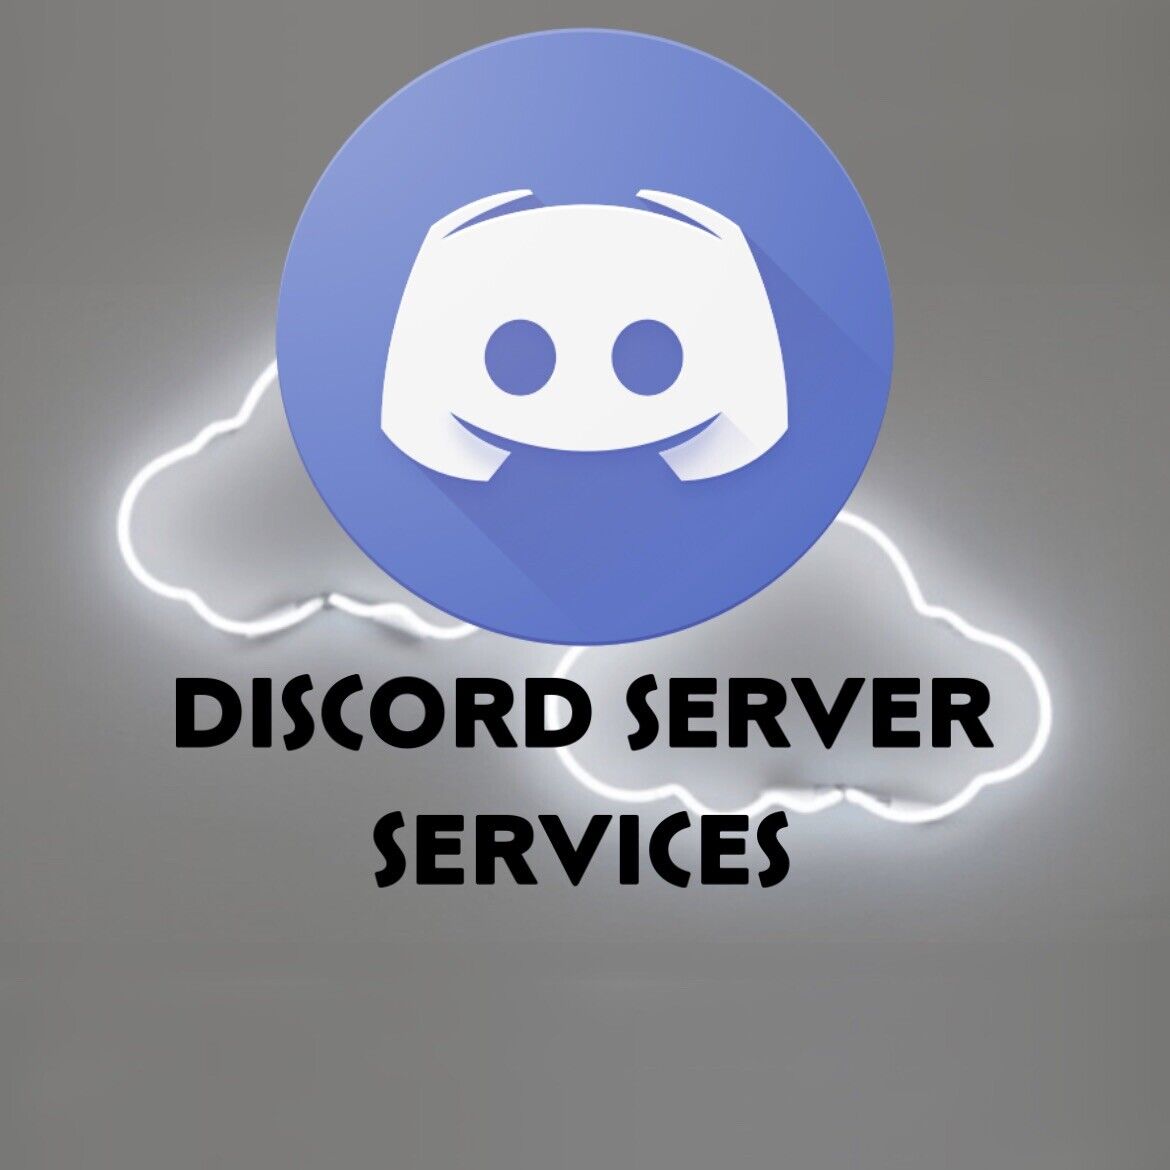 Discord Server(s) Building Services  (𝗥𝗘𝗔𝗗 𝗗𝗘𝗦𝗖𝗥𝗜𝗣𝗧𝗜𝗢𝗡 2)